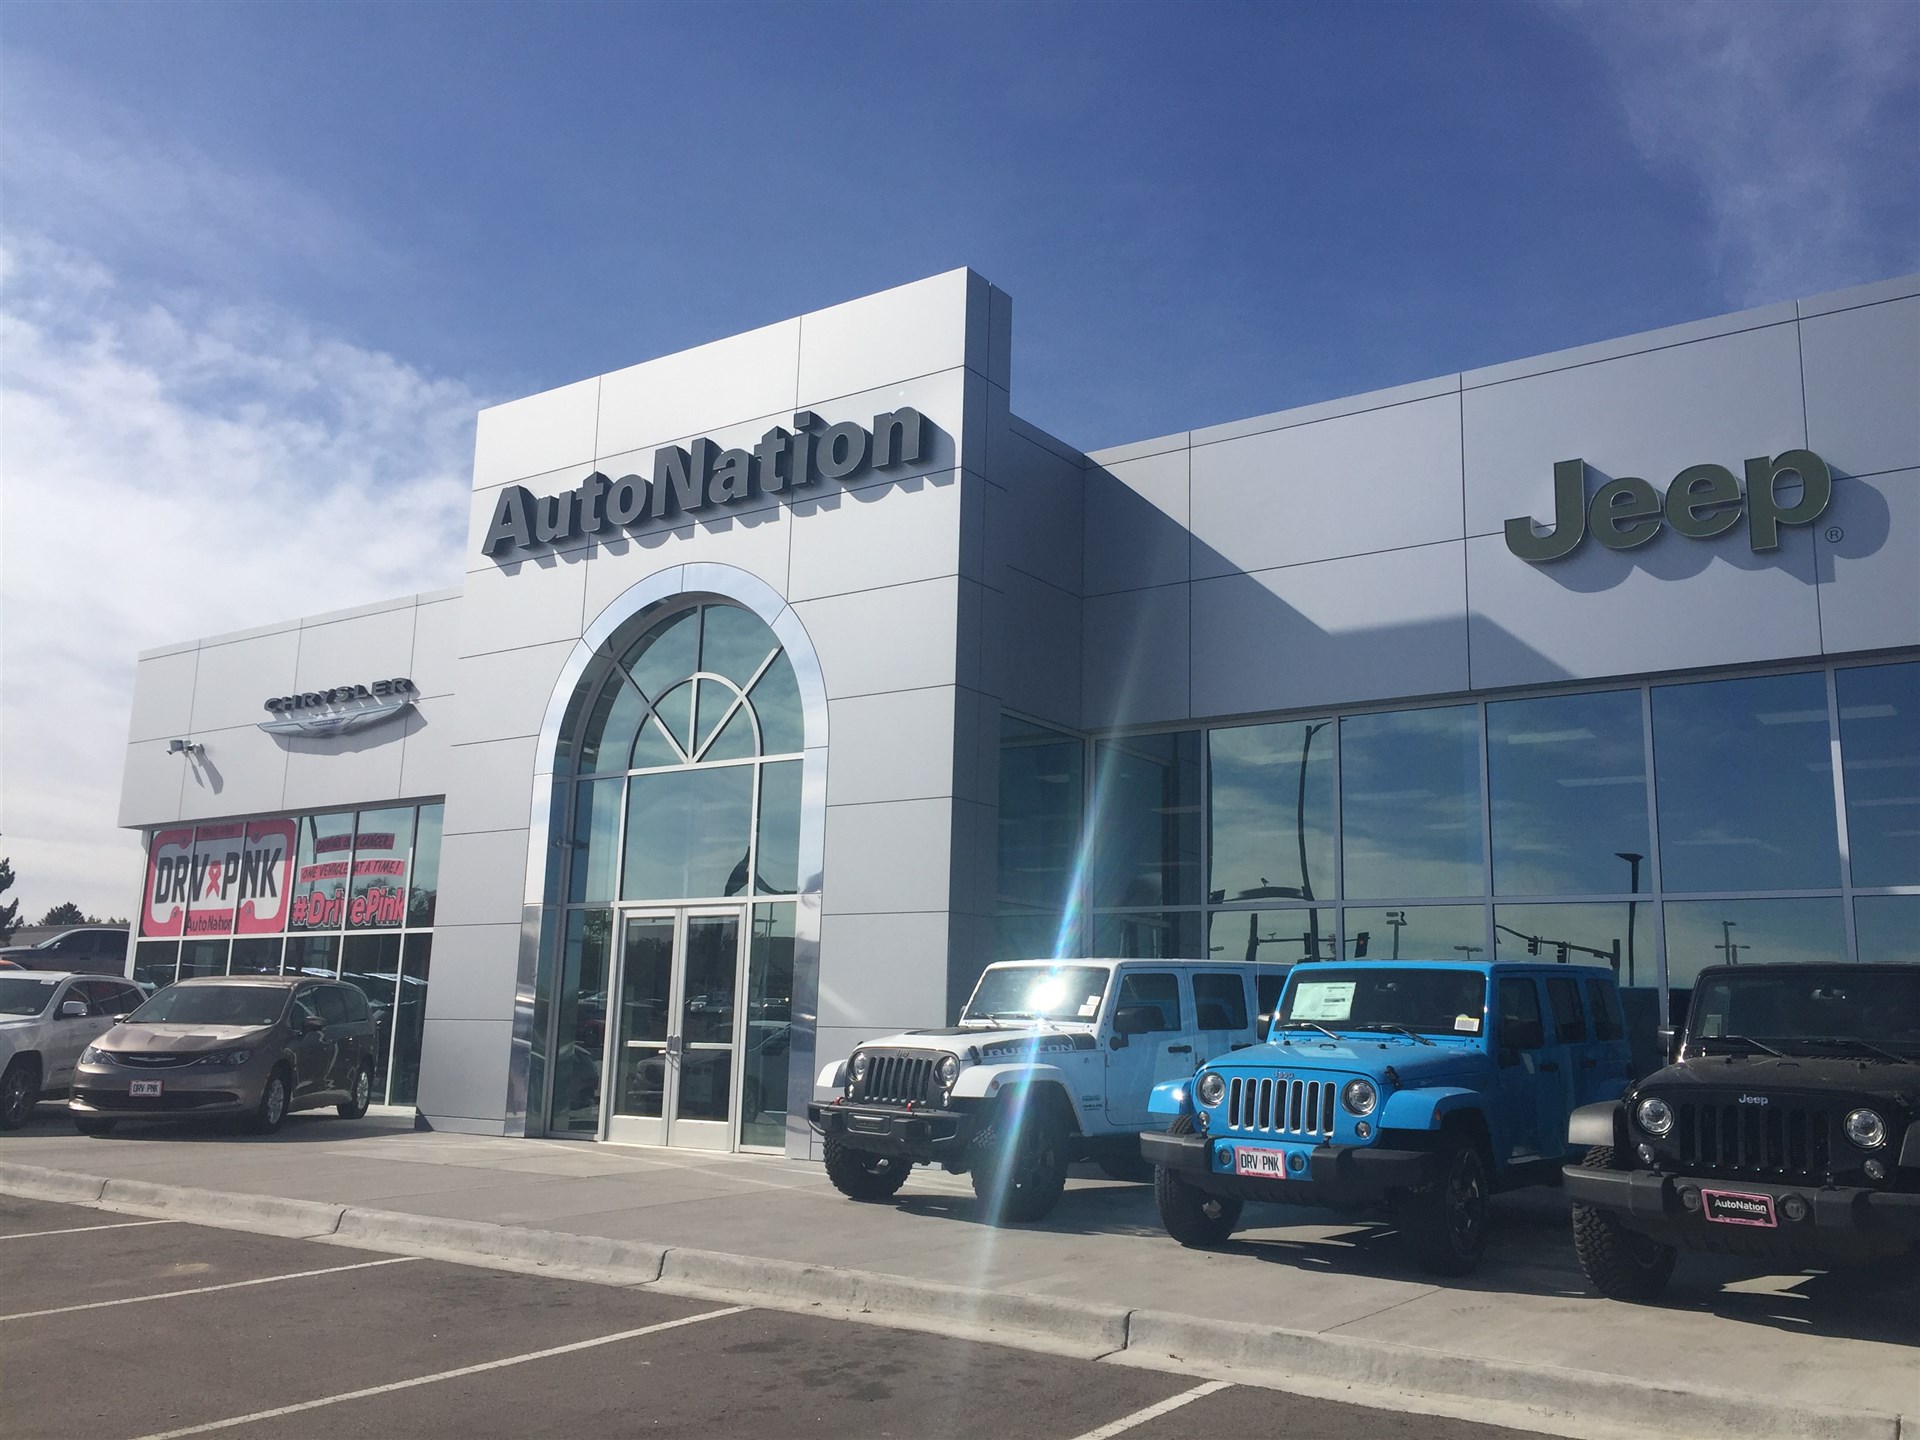 Autonation Chrysler Jeep Broadway